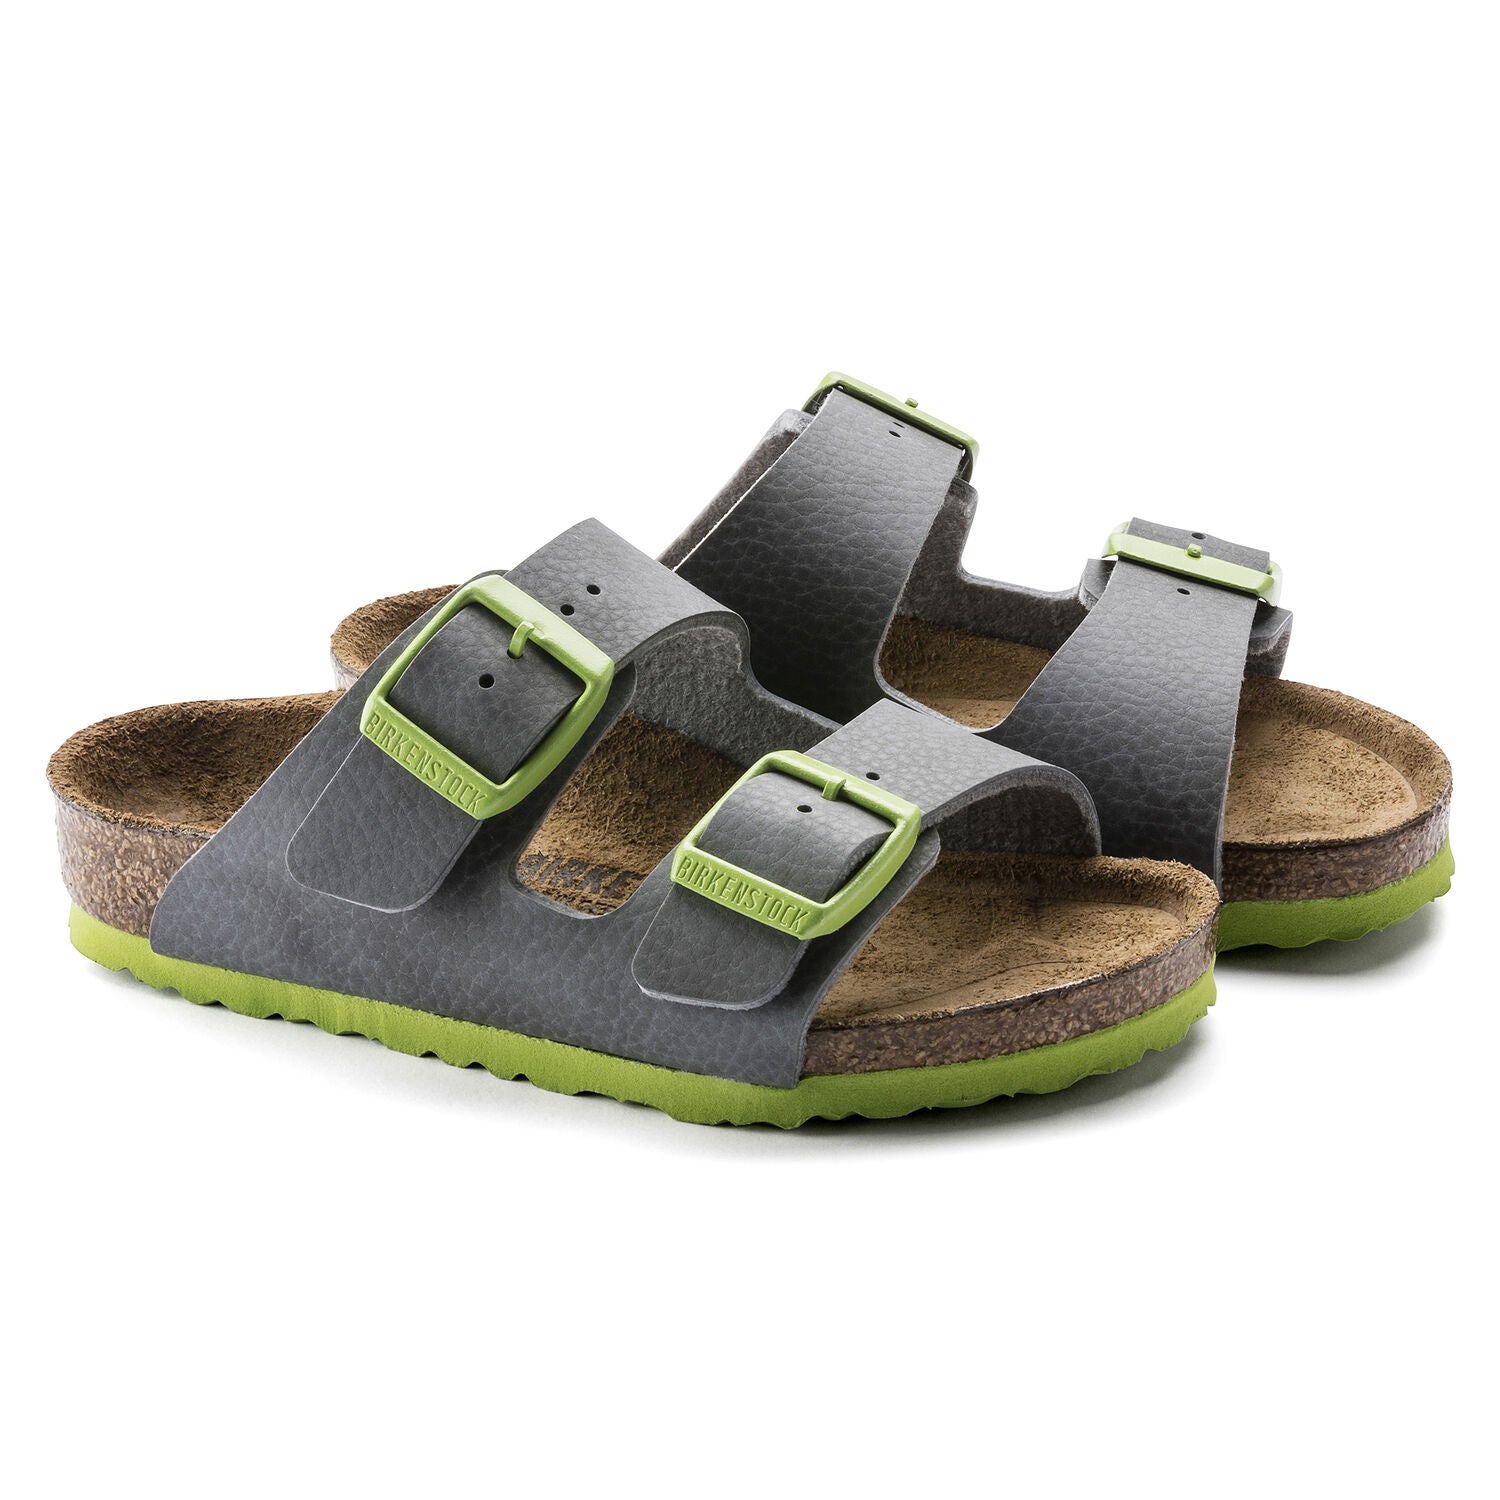 Birkenstock Kids Arizona leather sandals - Green